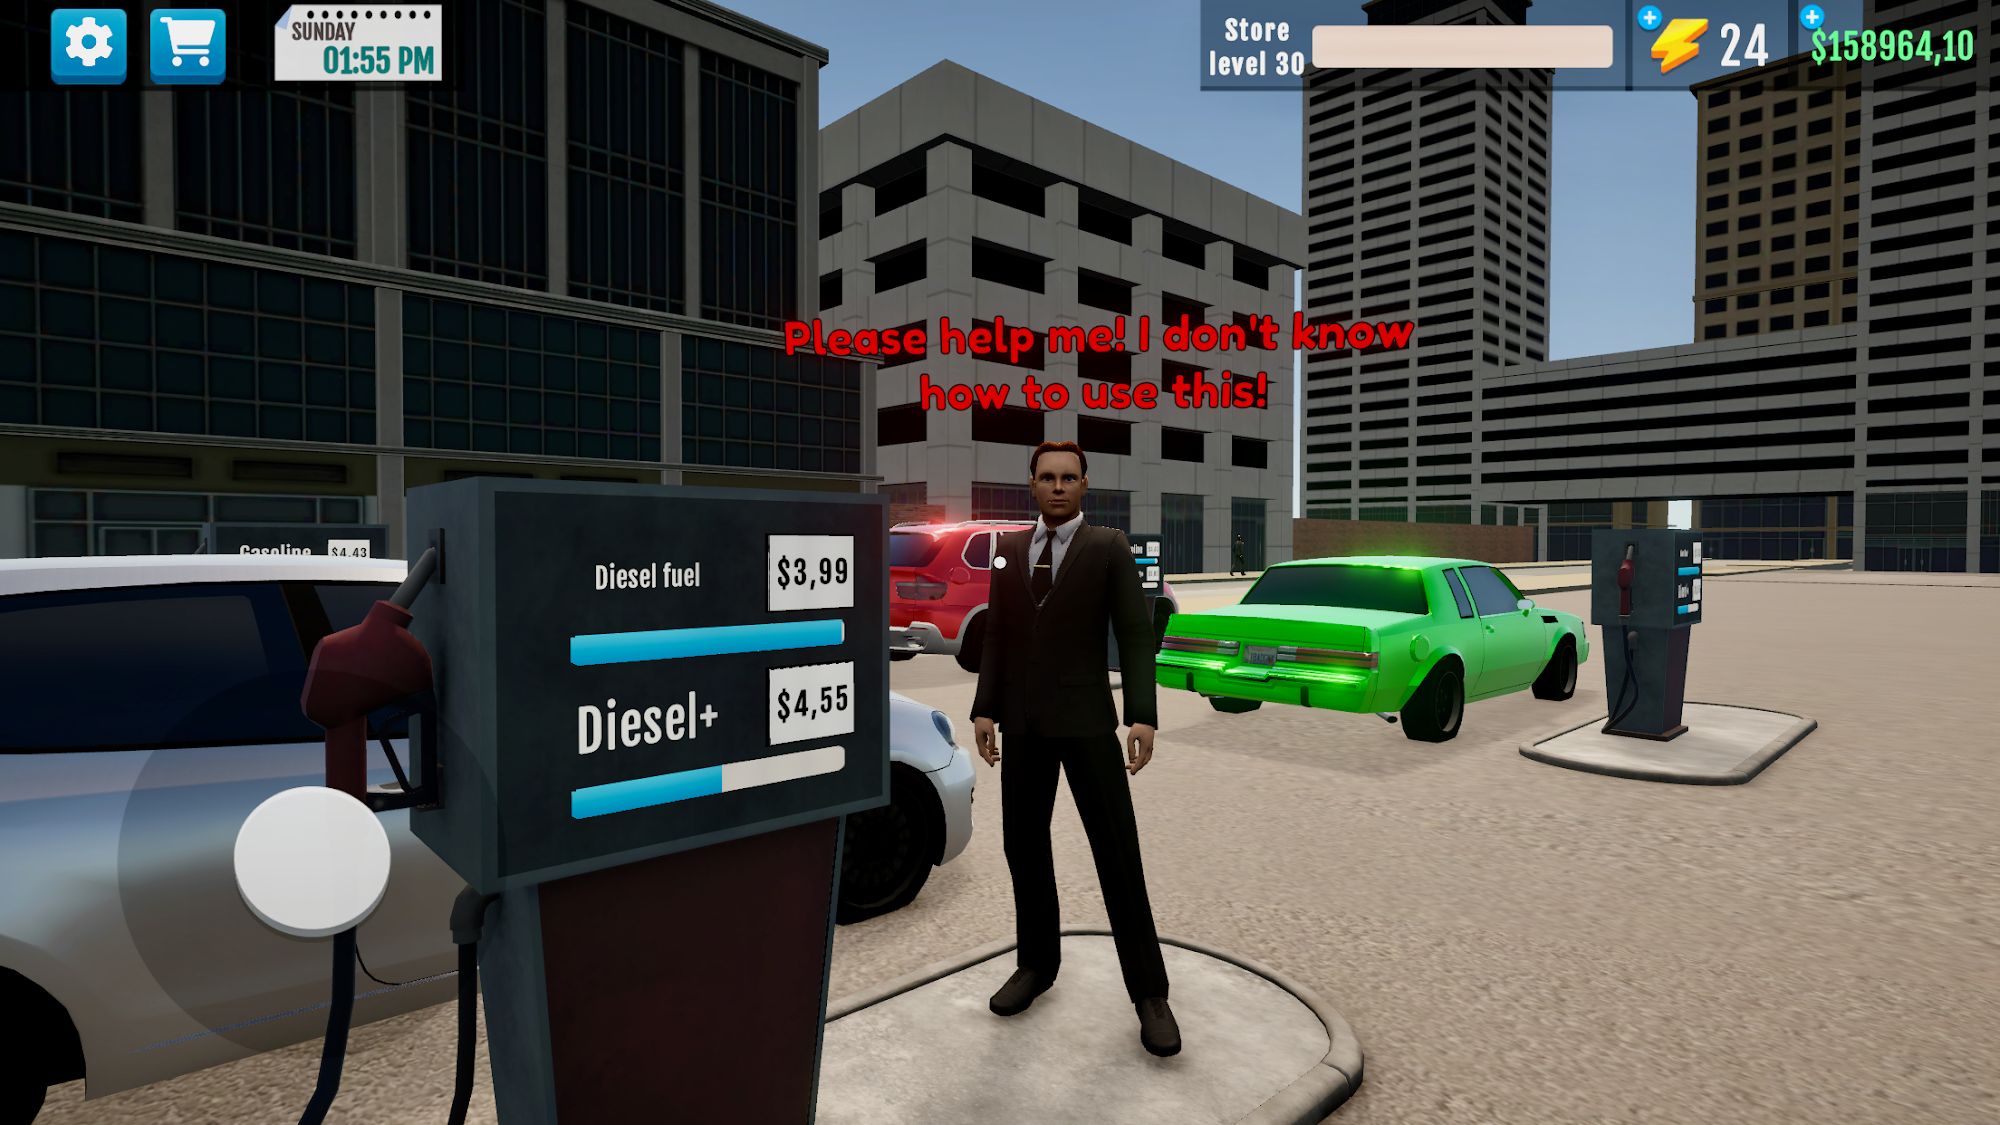 Download City Gas Station Simulator 3D für Android kostenlos.